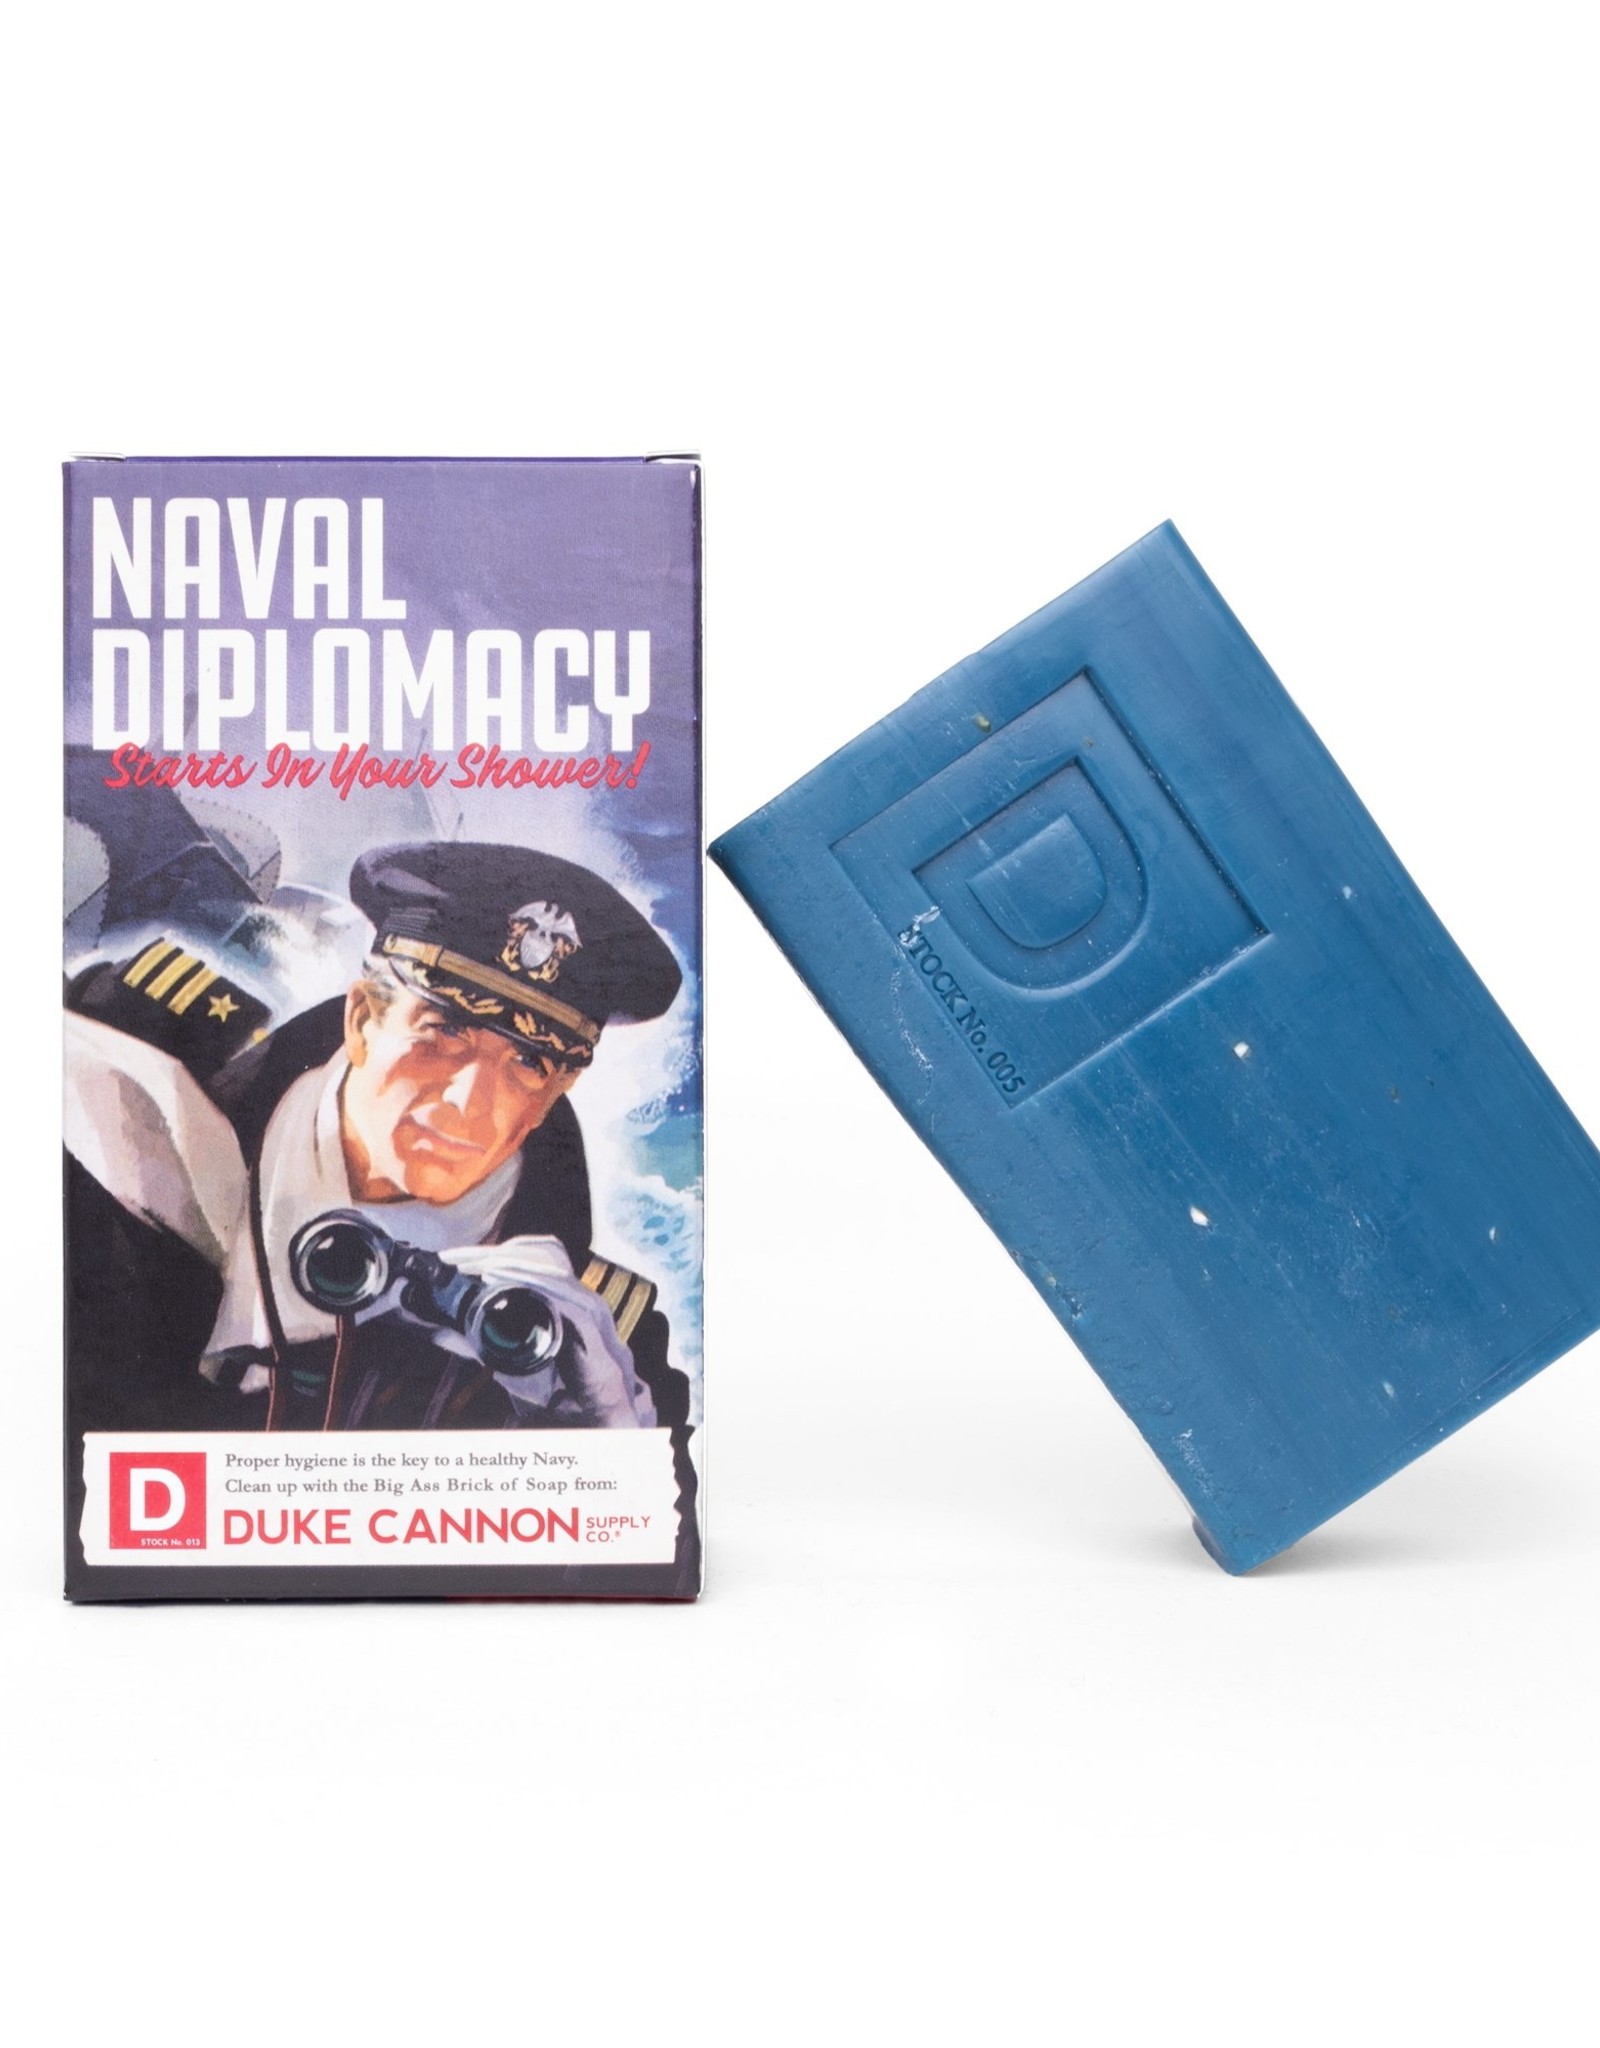 Duke Cannon Smells Like Naval Supremacy Soap